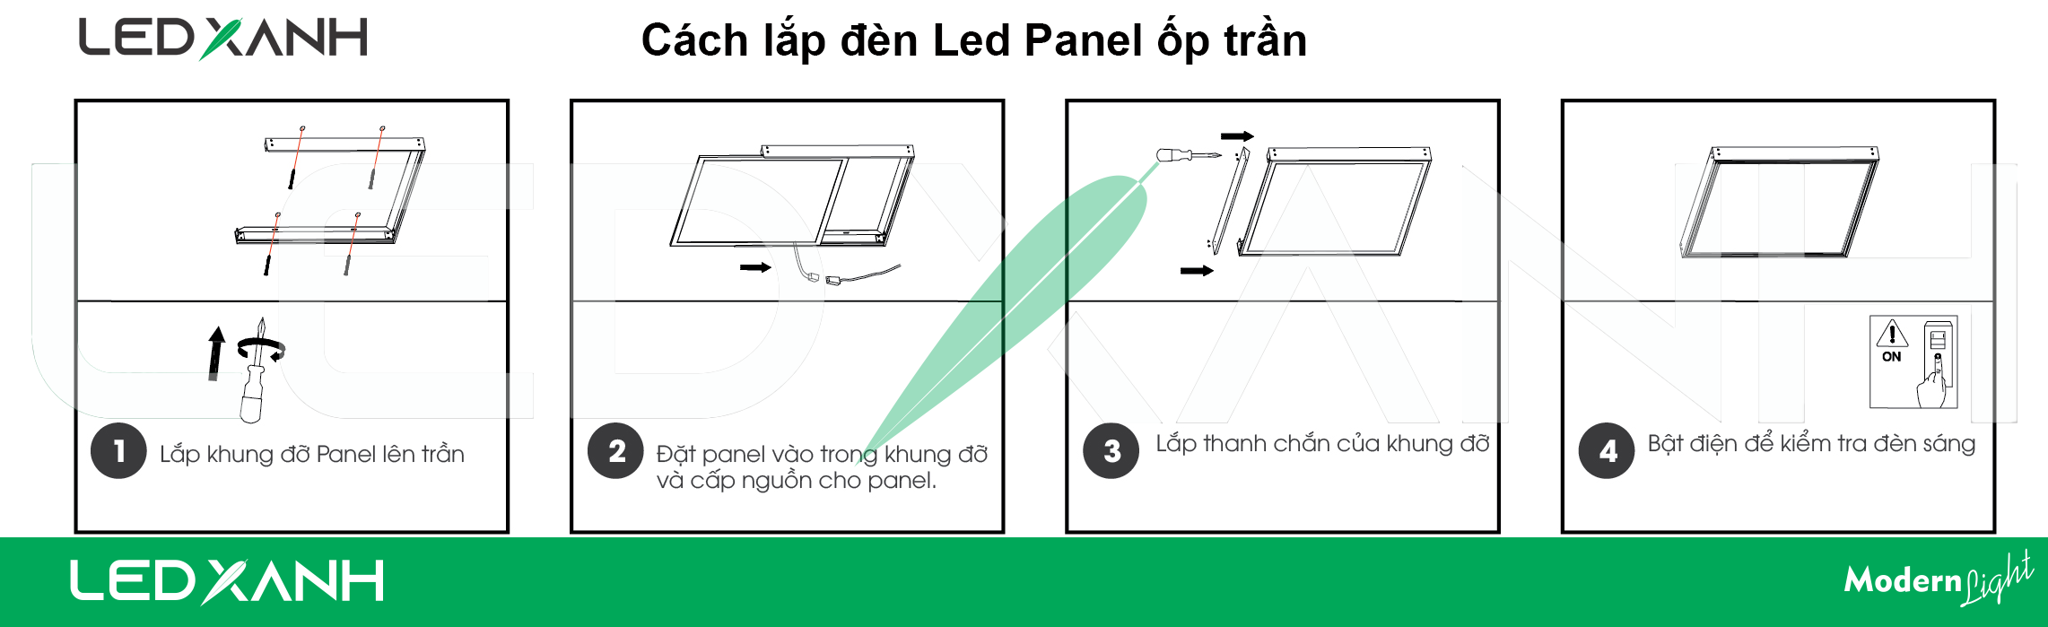 Cách lắp đèn Led Panel ốp trần